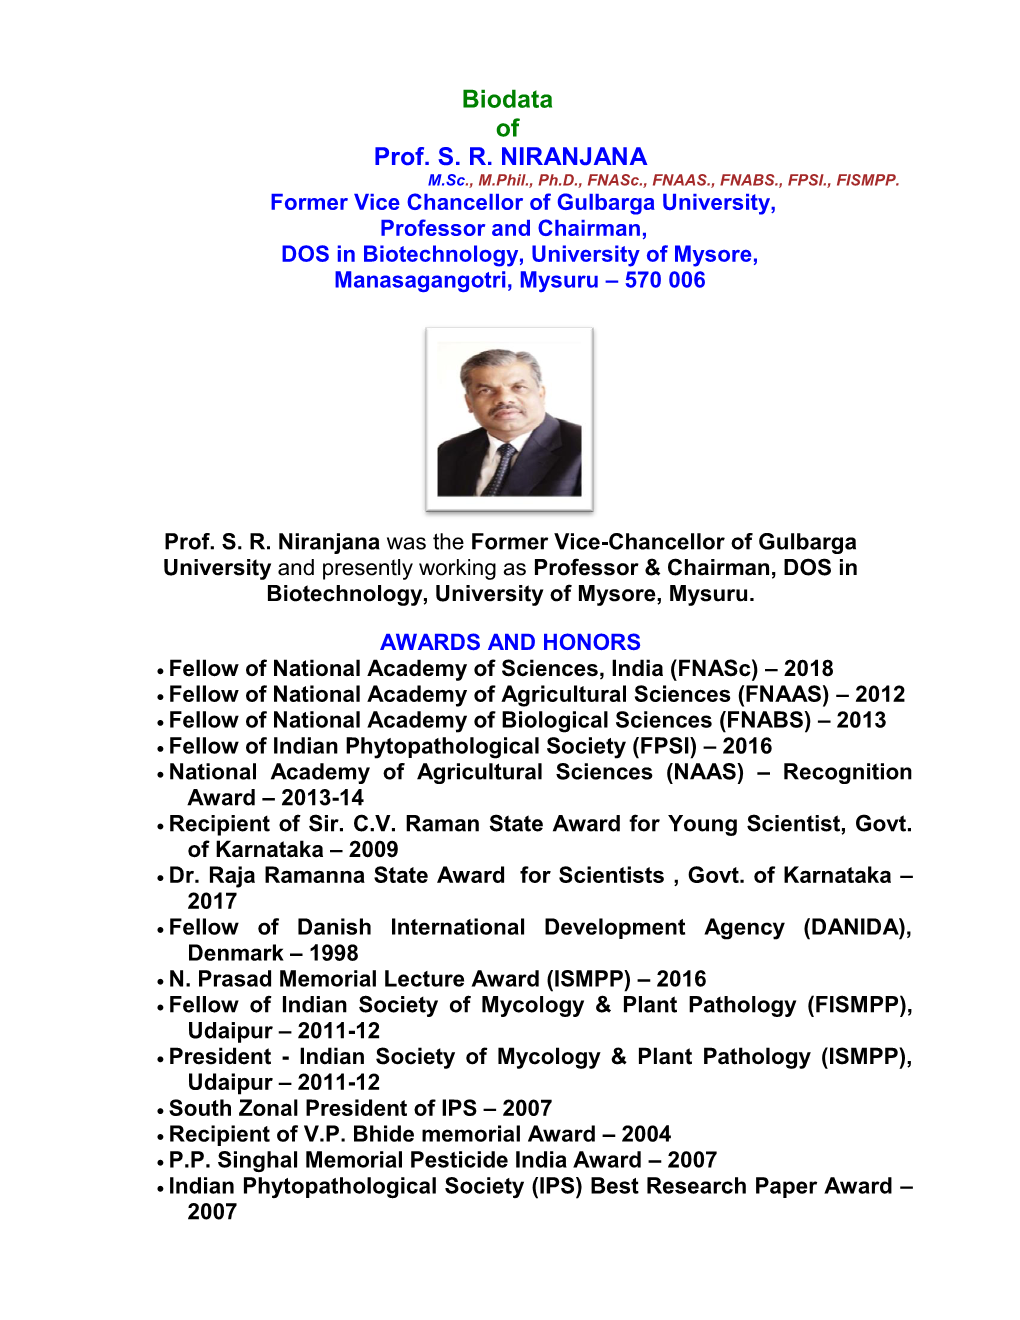 Biodata of Prof. S. R. NIRANJANA M.Sc., M.Phil., Ph.D., Fnasc., FNAAS., FNABS., FPSI., FISMPP